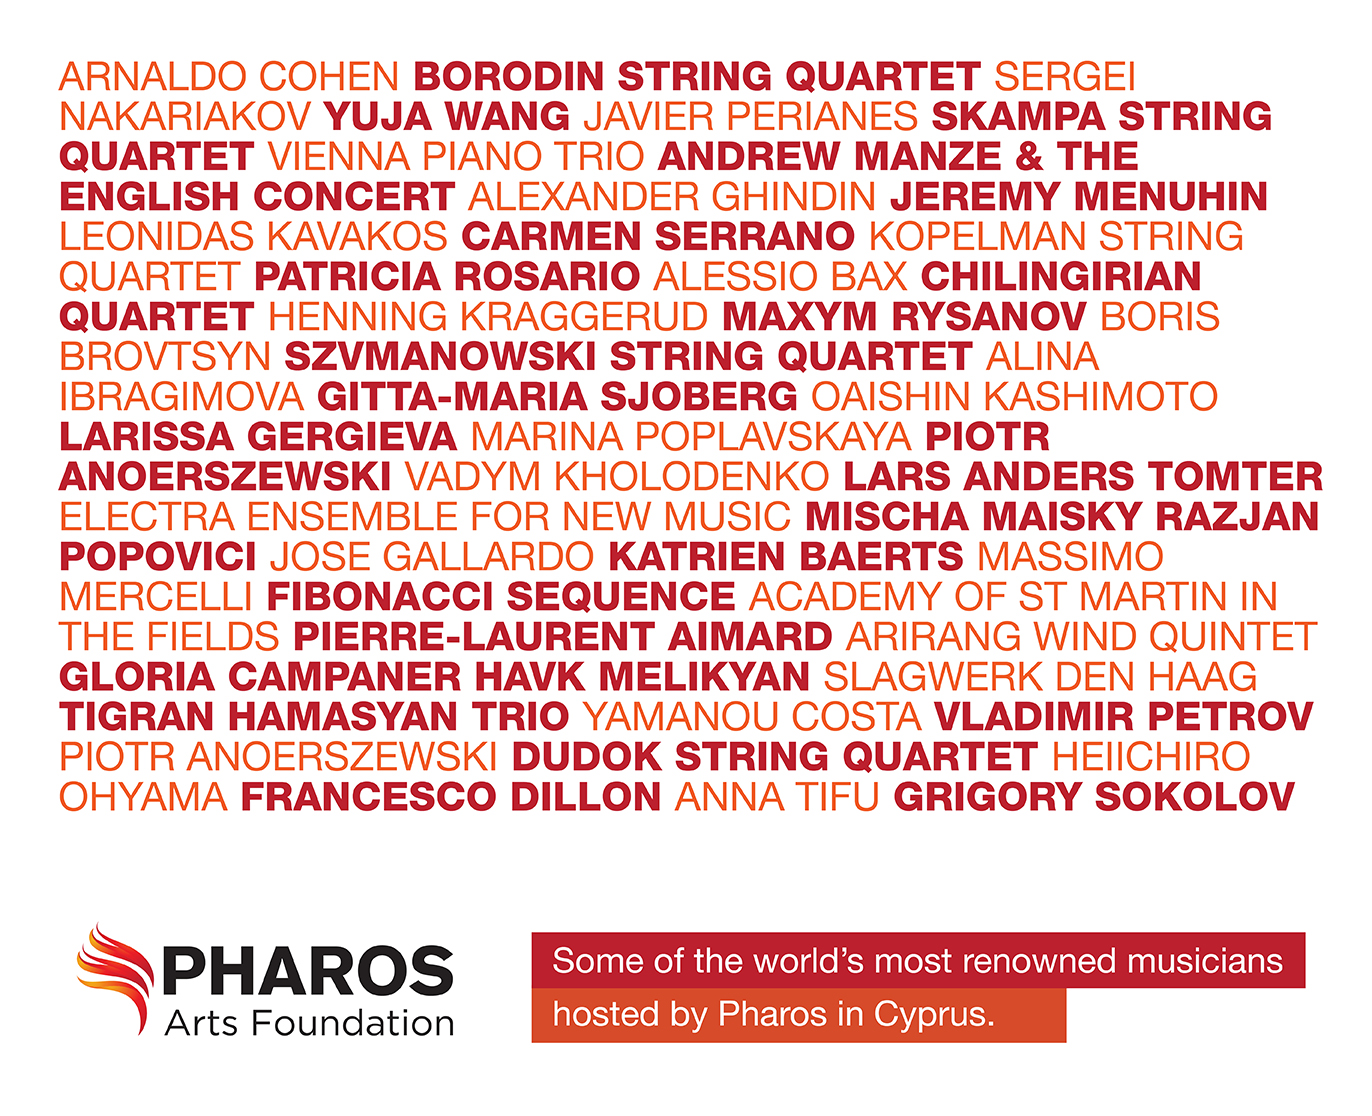 Pharos Arts Foundation